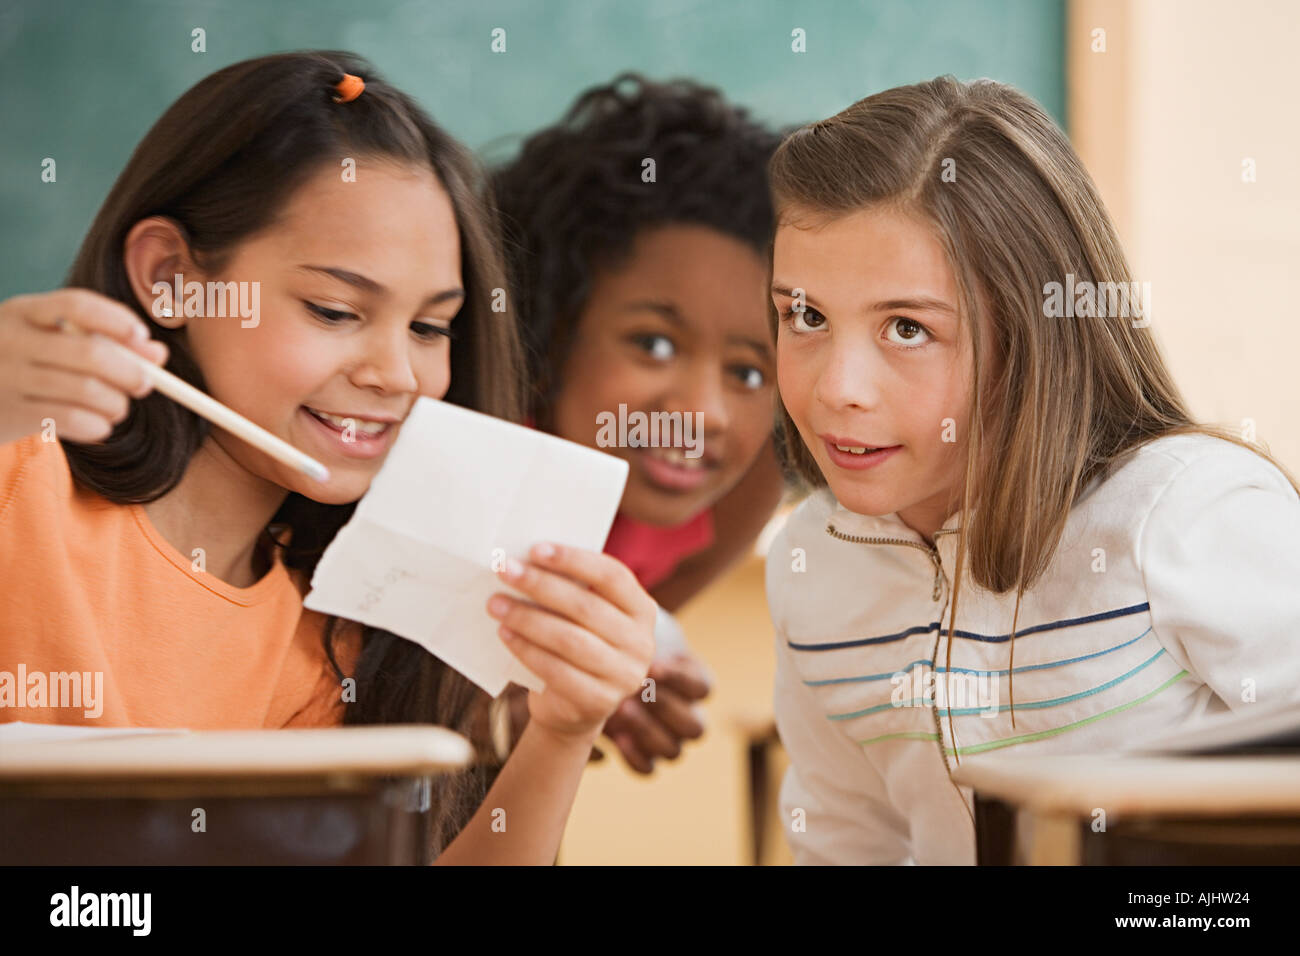 Three girls reading a note Stock Photo